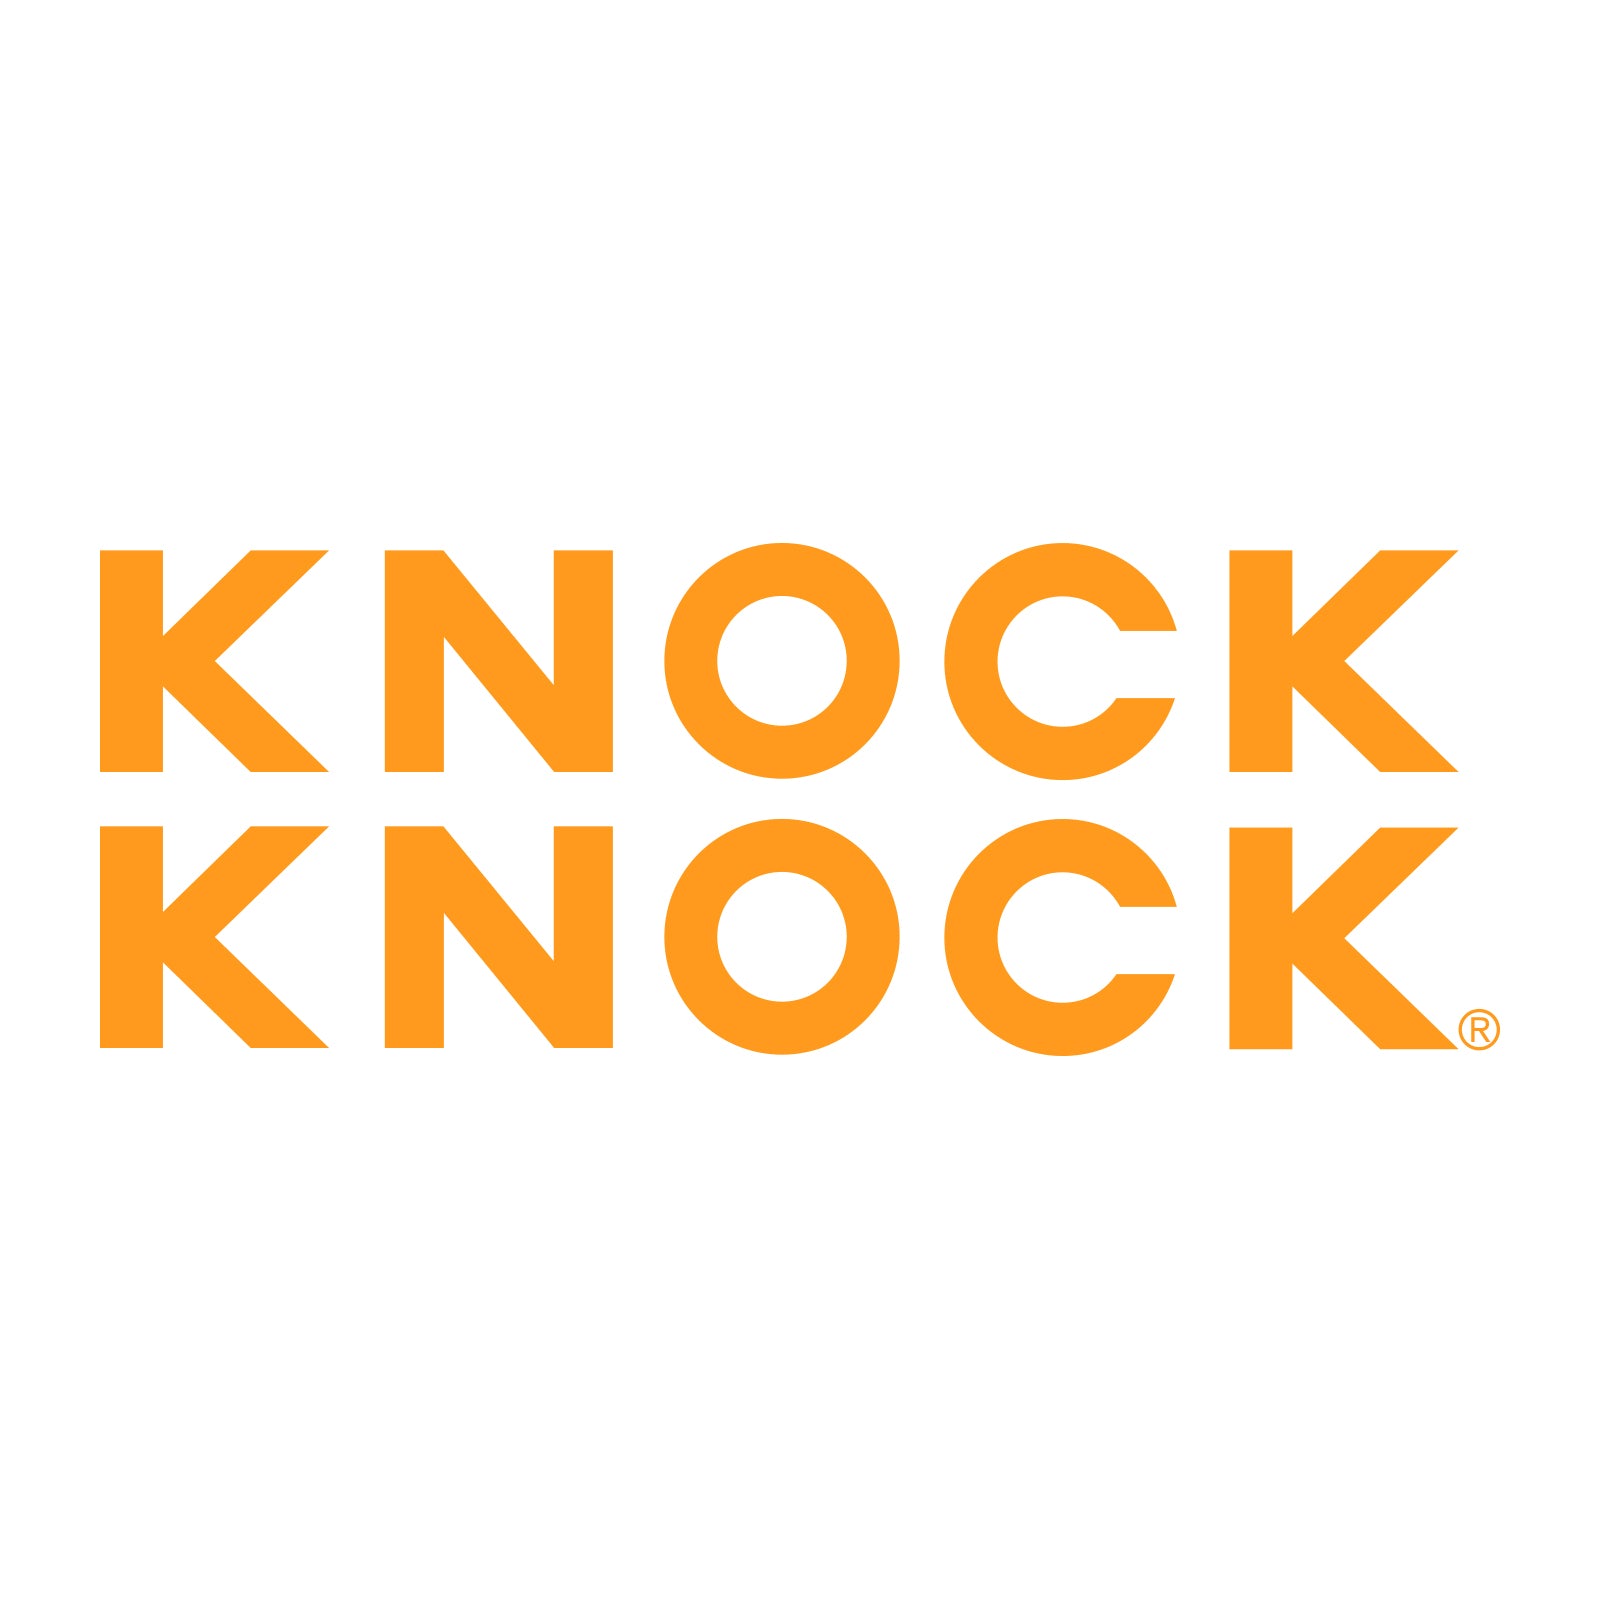 (c) Knockknockstuff.com